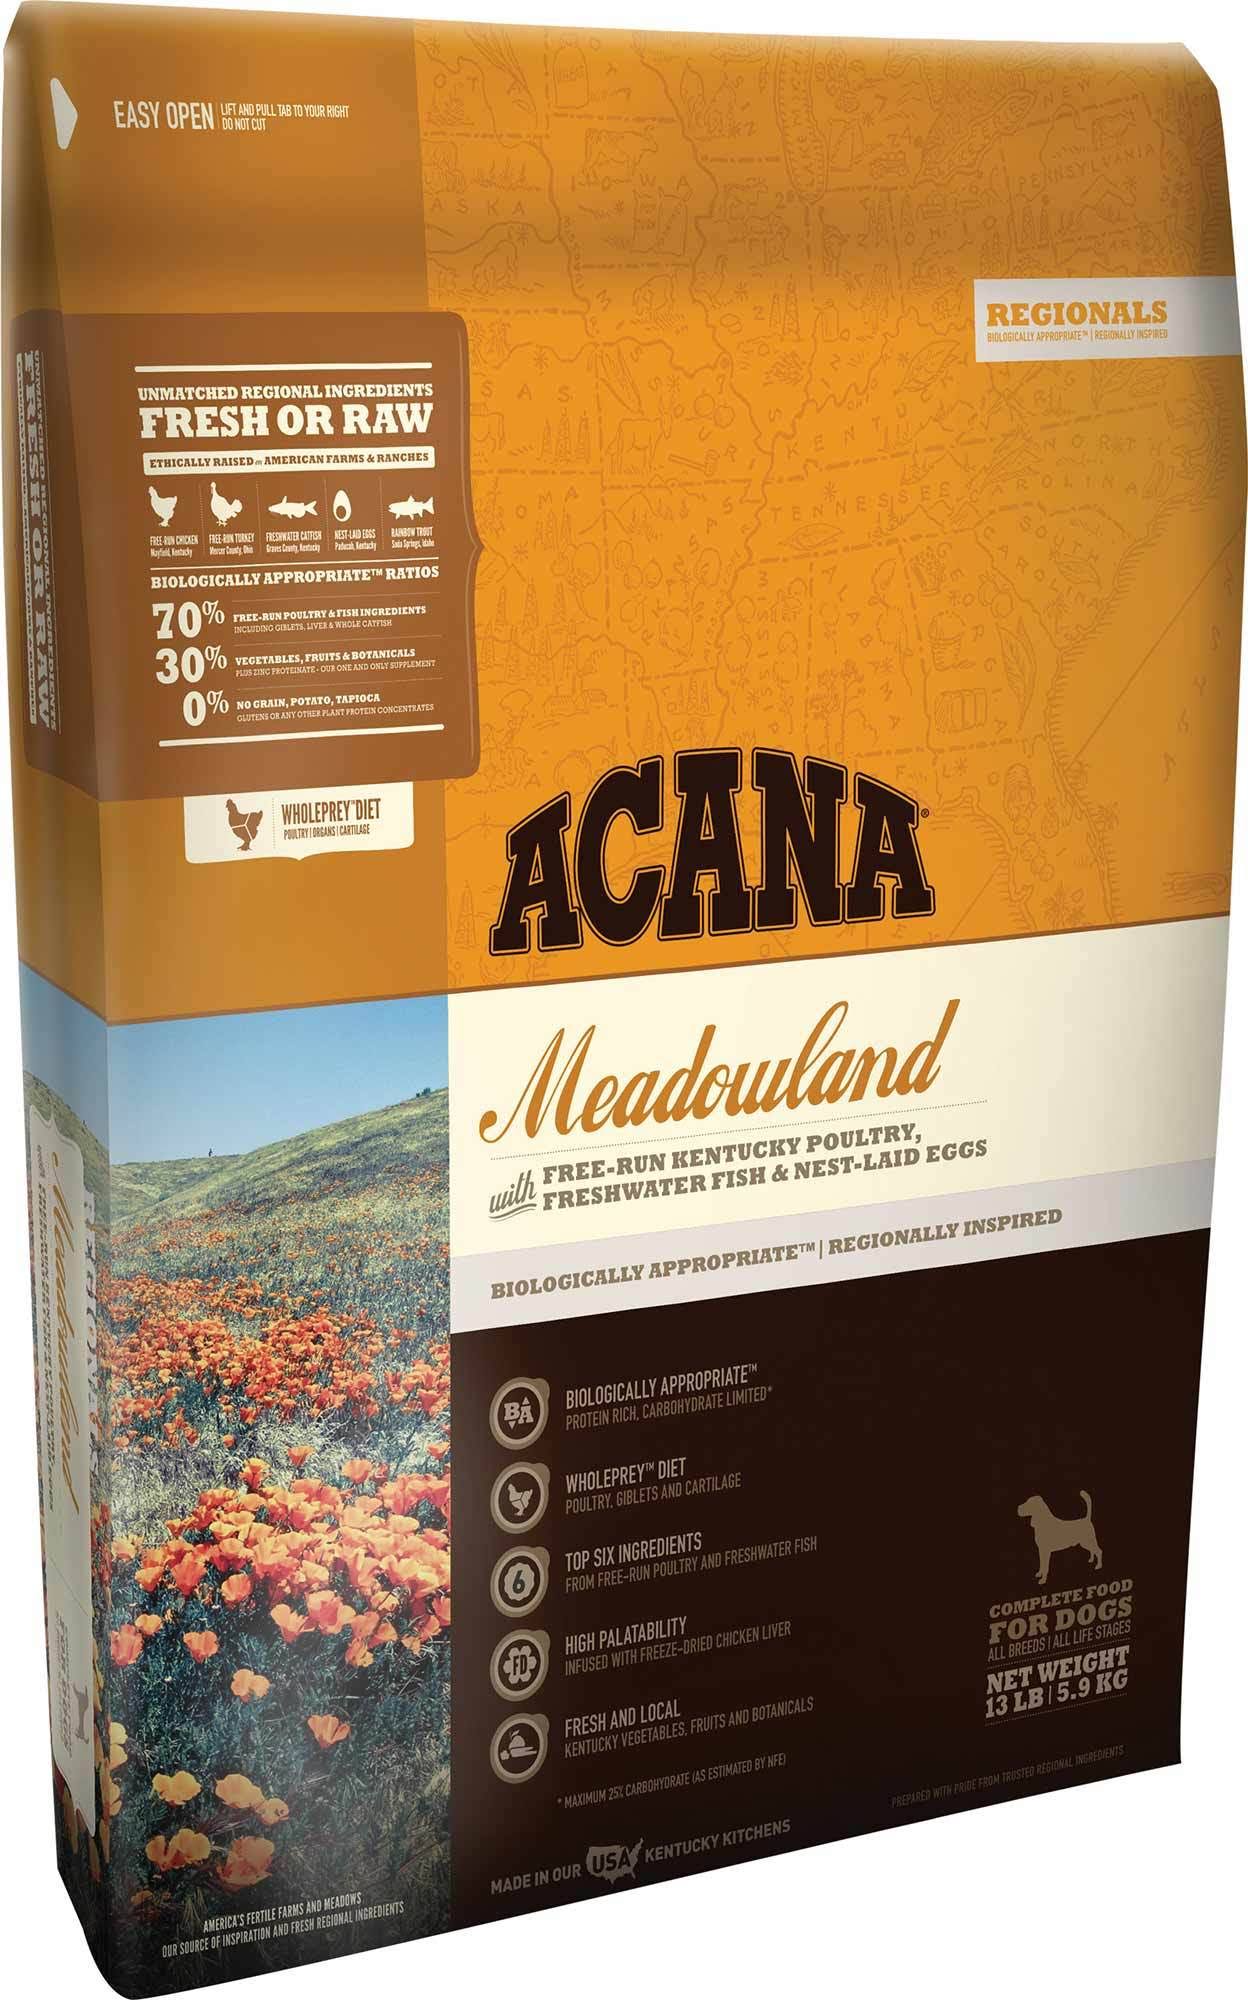 ACANA Regionals Meadowland Dry Dog Food, 4.5 lb